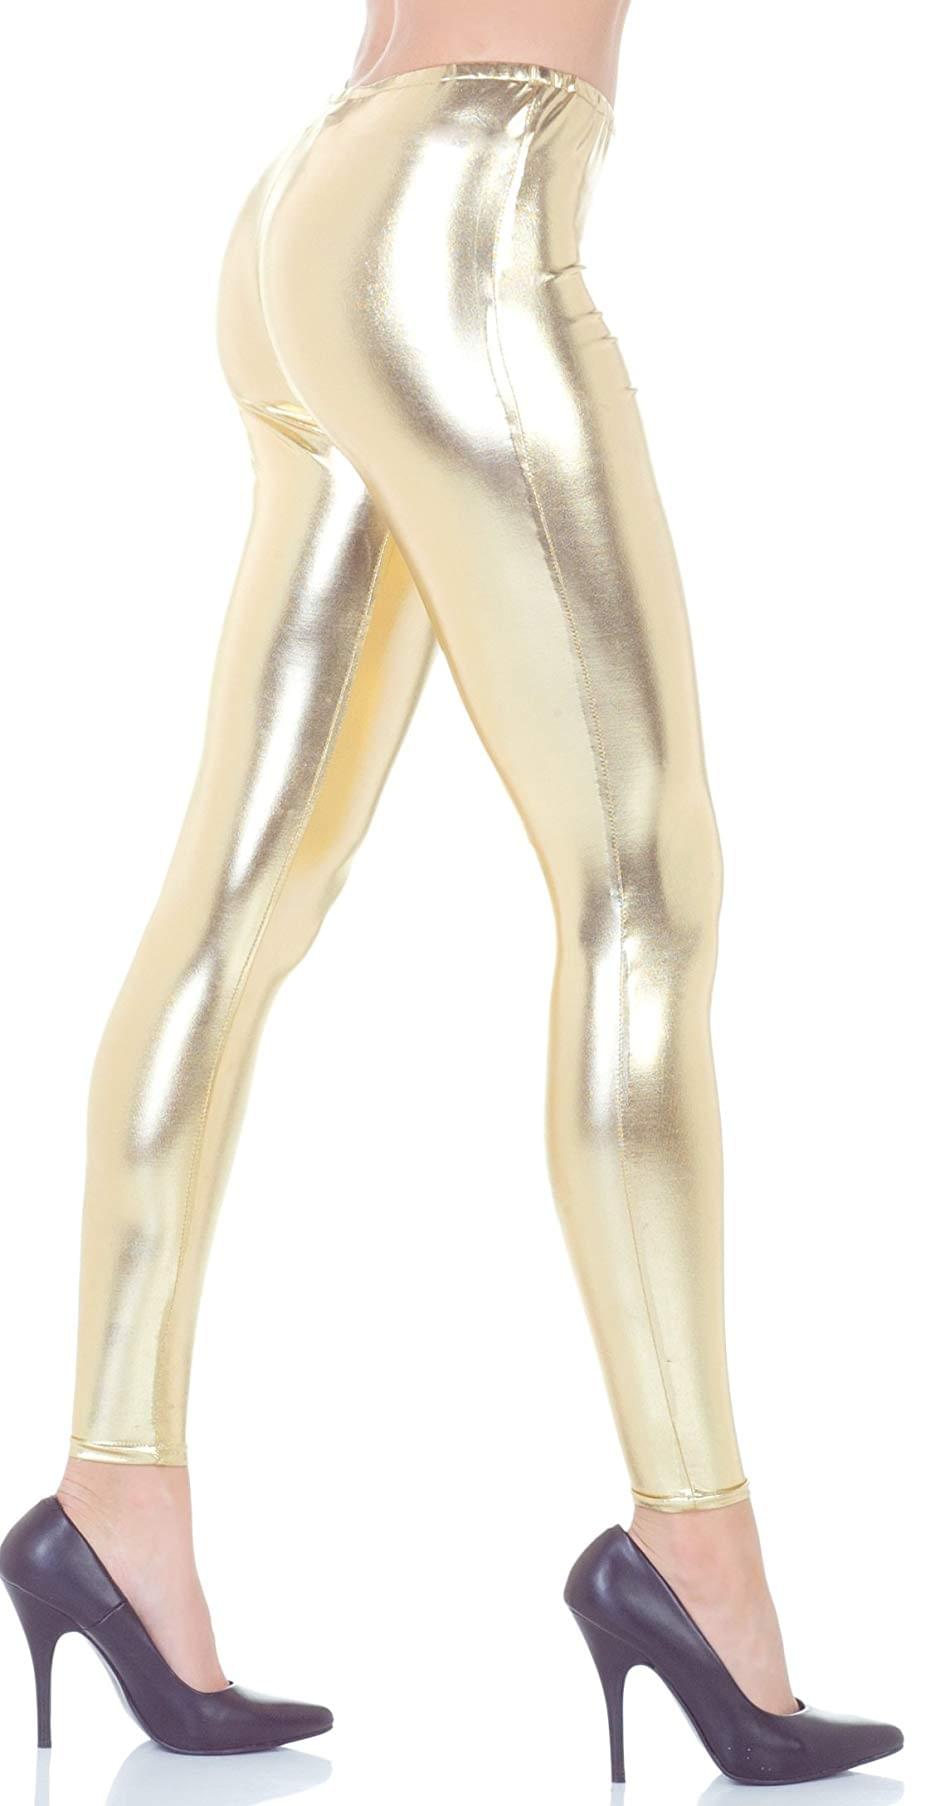 Leggings Costume Accessory Adult: Gold